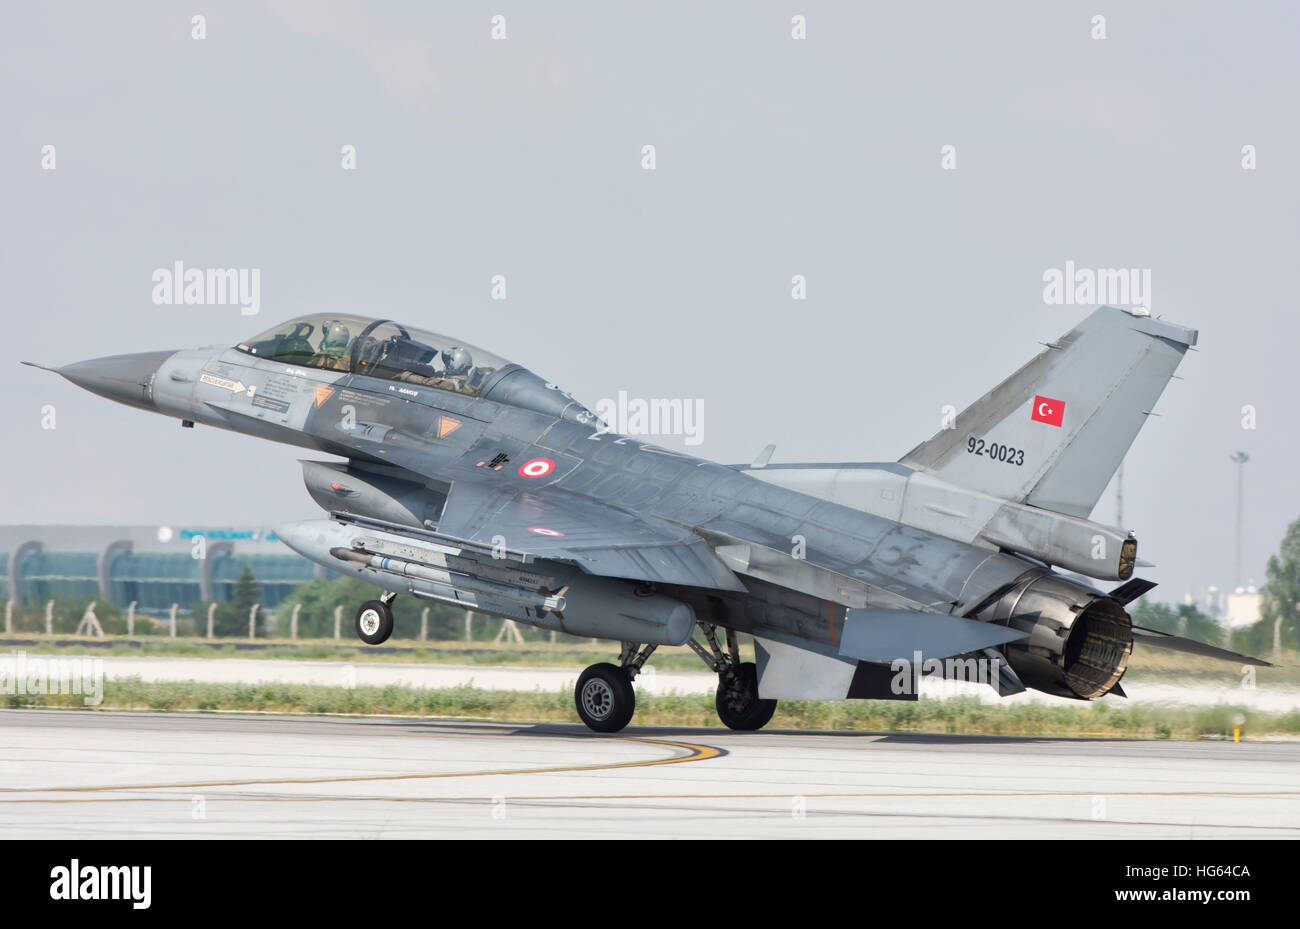 Turkish Air Force F-16 lands on runway in Konya, Turkey. Stock Photo